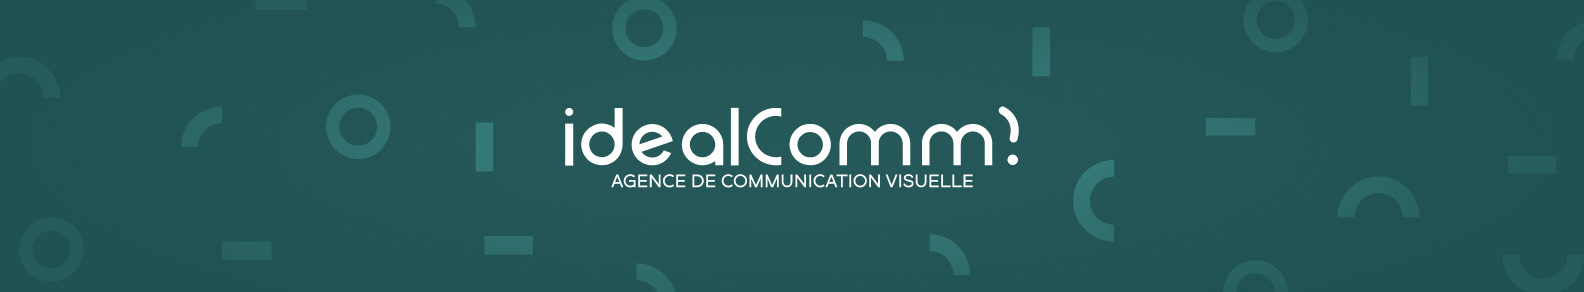 Agence Idealcomm's profile banner